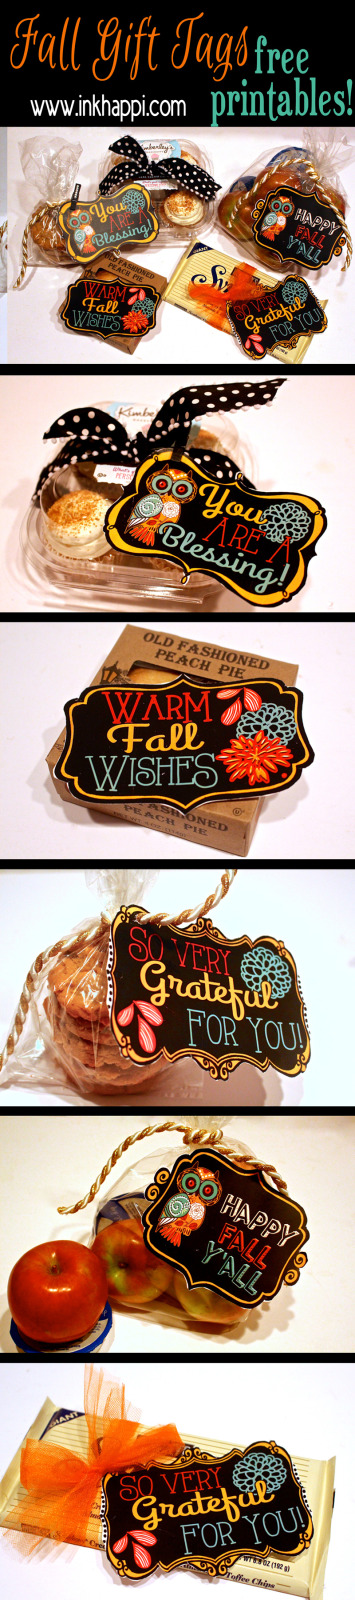 Fall printable gift tags to show your gratitude!